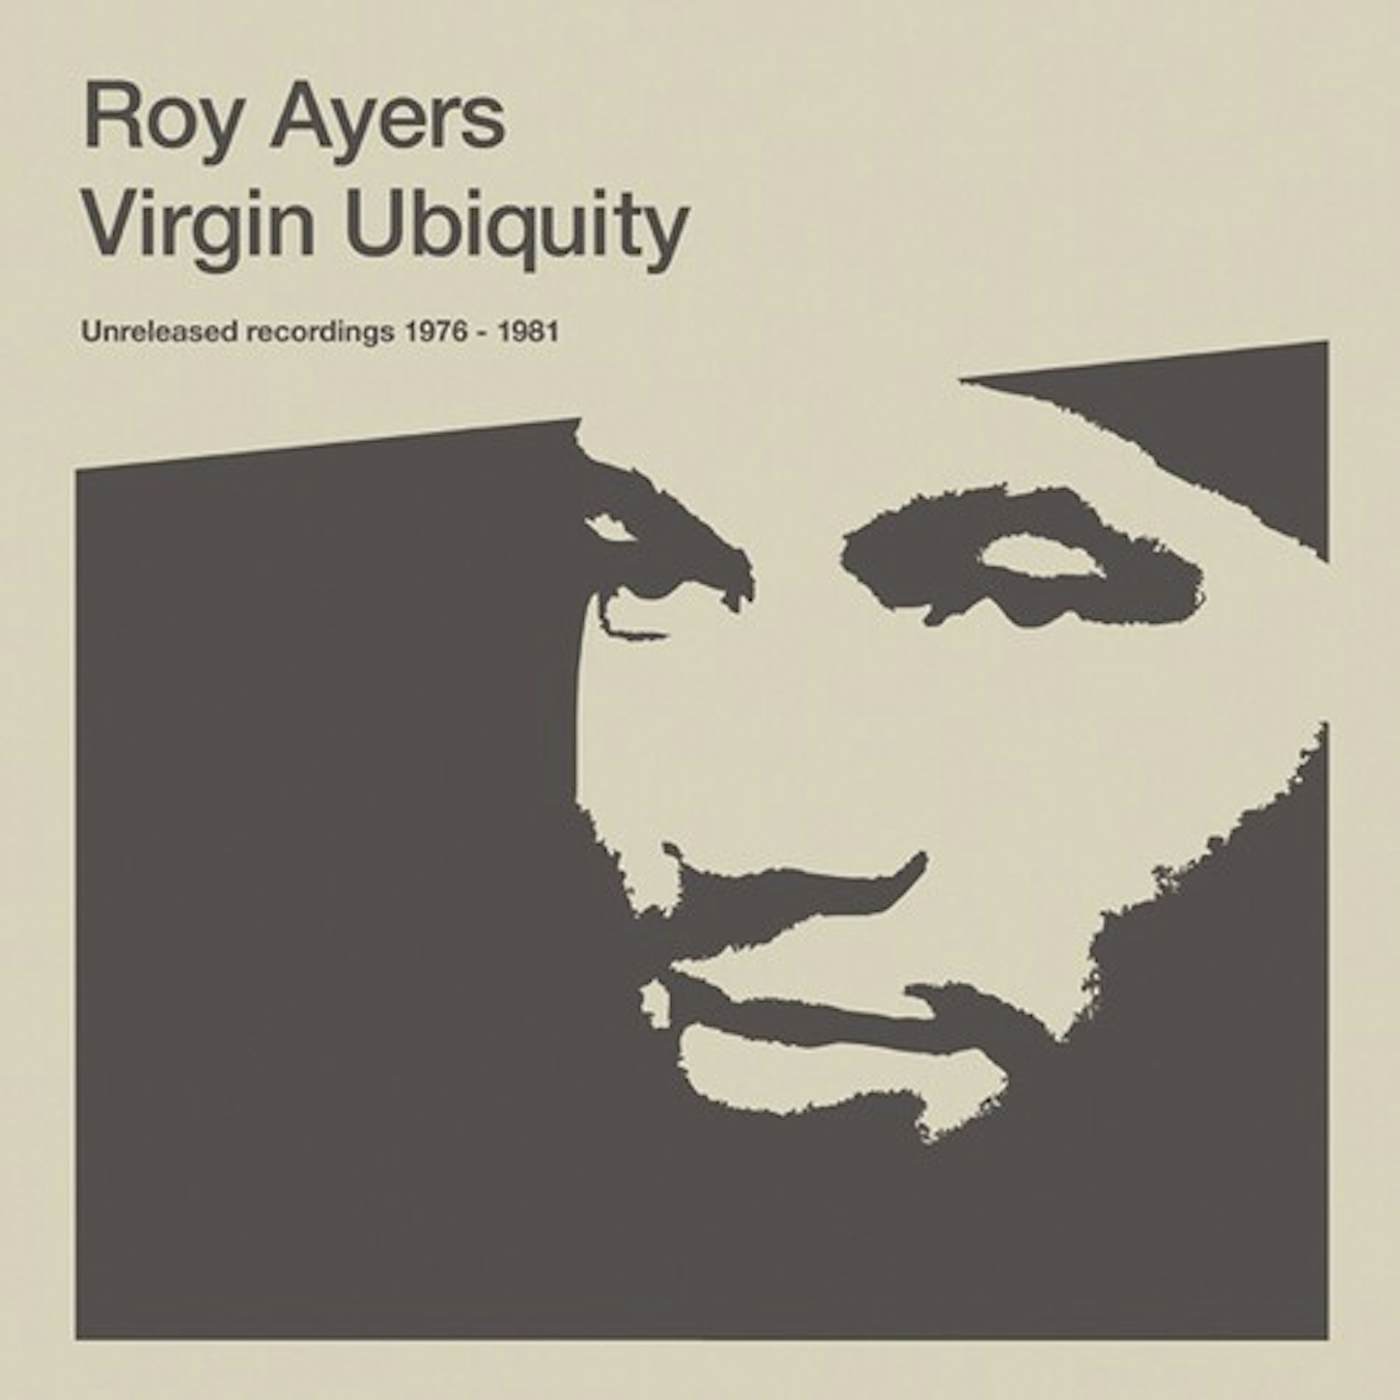 Roy Ayers Virgin Ubiquity: Unreleased Recordings 1976 - 1981 Vinyl Record